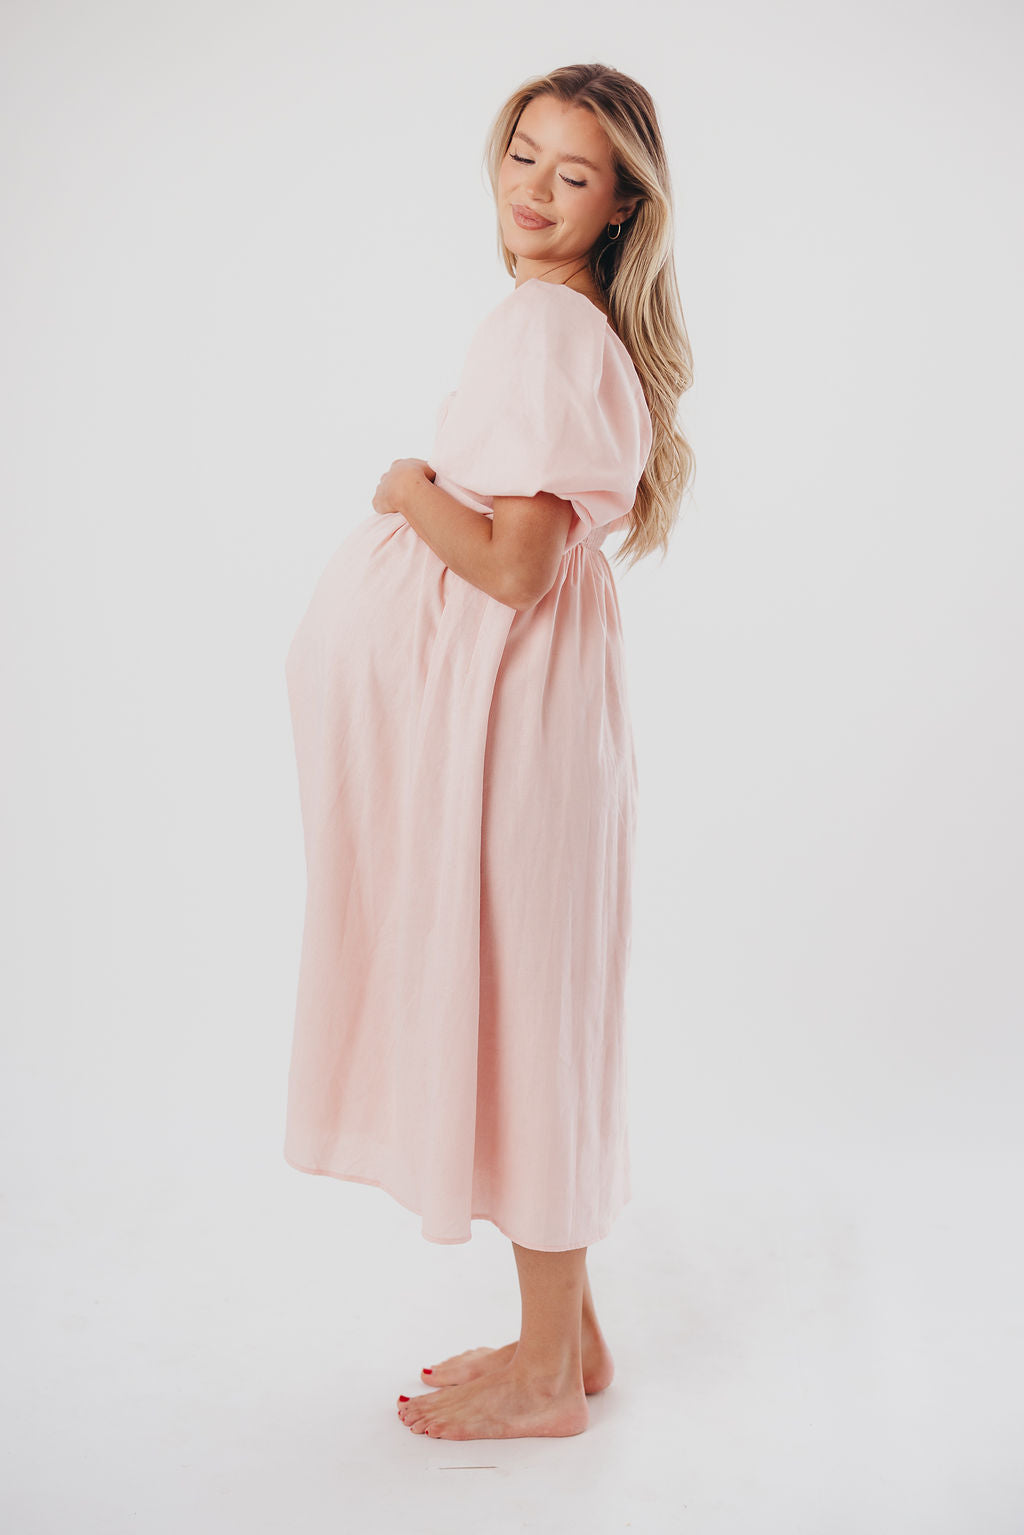 Hamilton Midi Dress in Pink - Bump Friendly (S-XL) PRE-ORDER